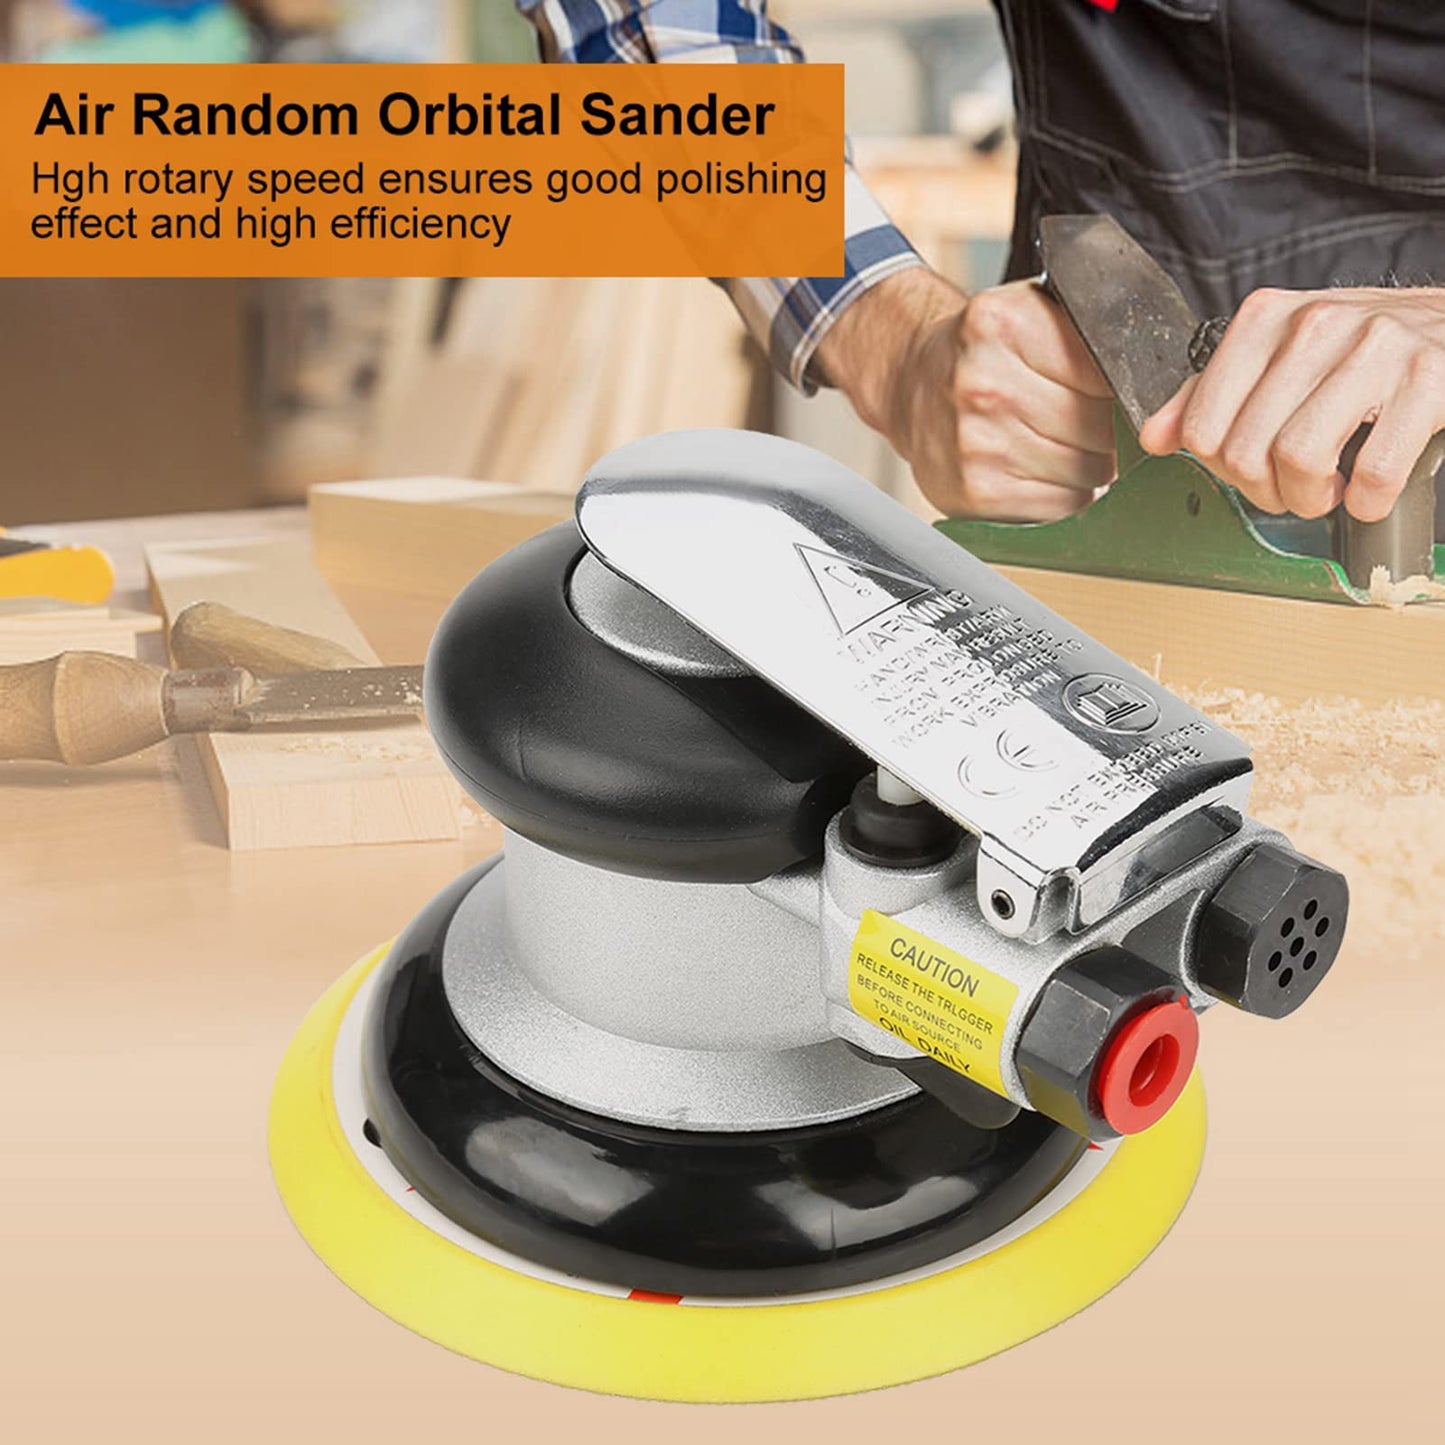 Air Sander, Air Sander AT-780 5inch/4inch Air Random Orbital Sander Round Polisher Pneumatic Hand Sanding Tool for Surface, Random Orbit Sanders (5in